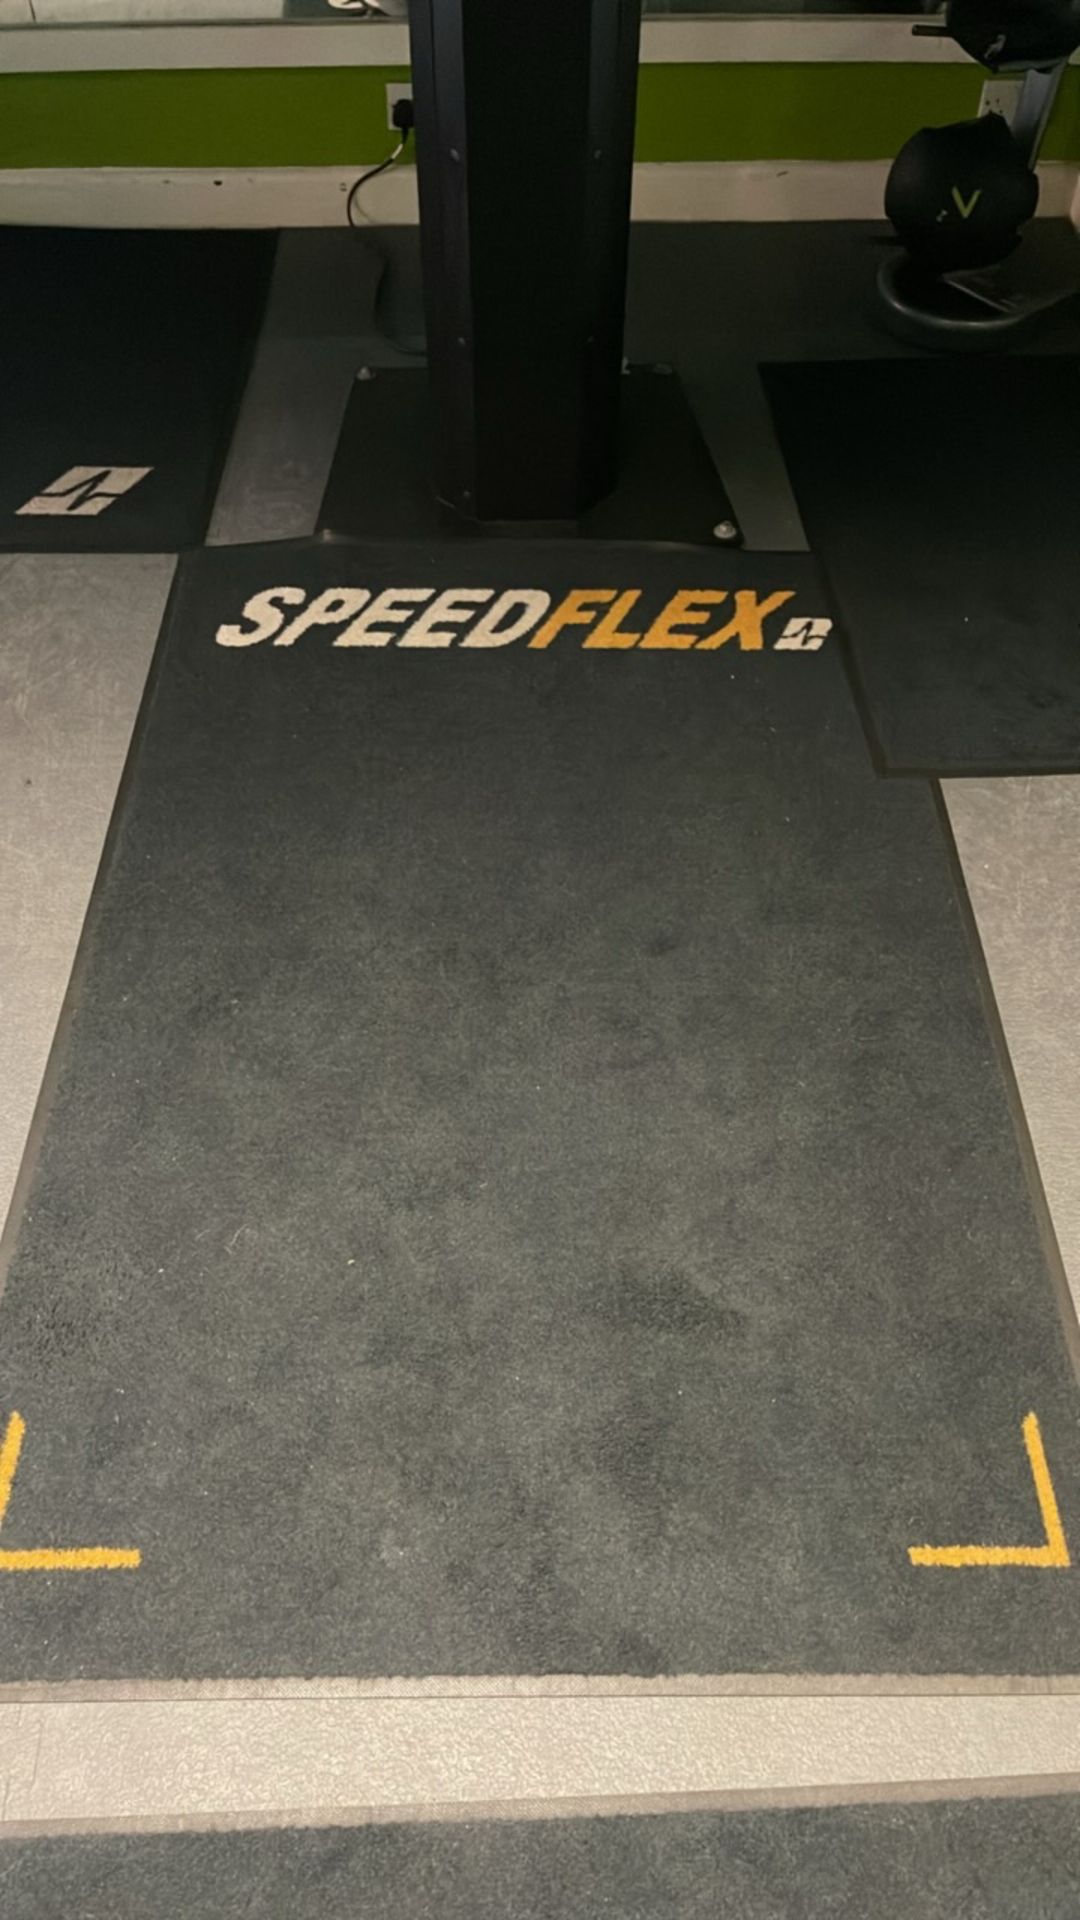 SpeedFlex Station - Image 6 of 6